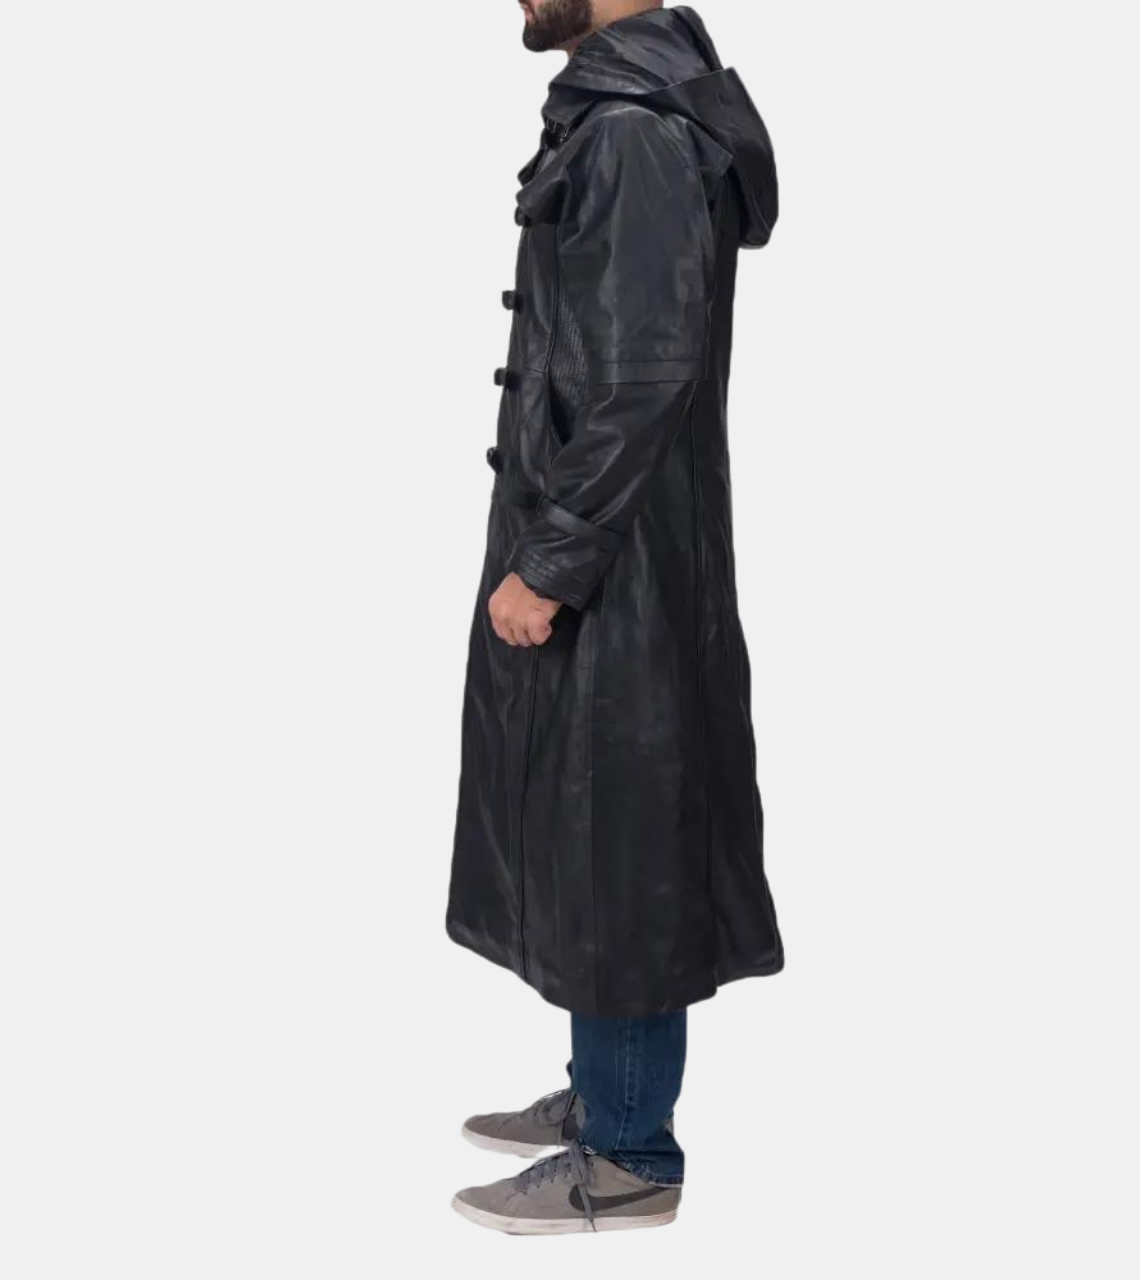 Black Hooded Leather Coat